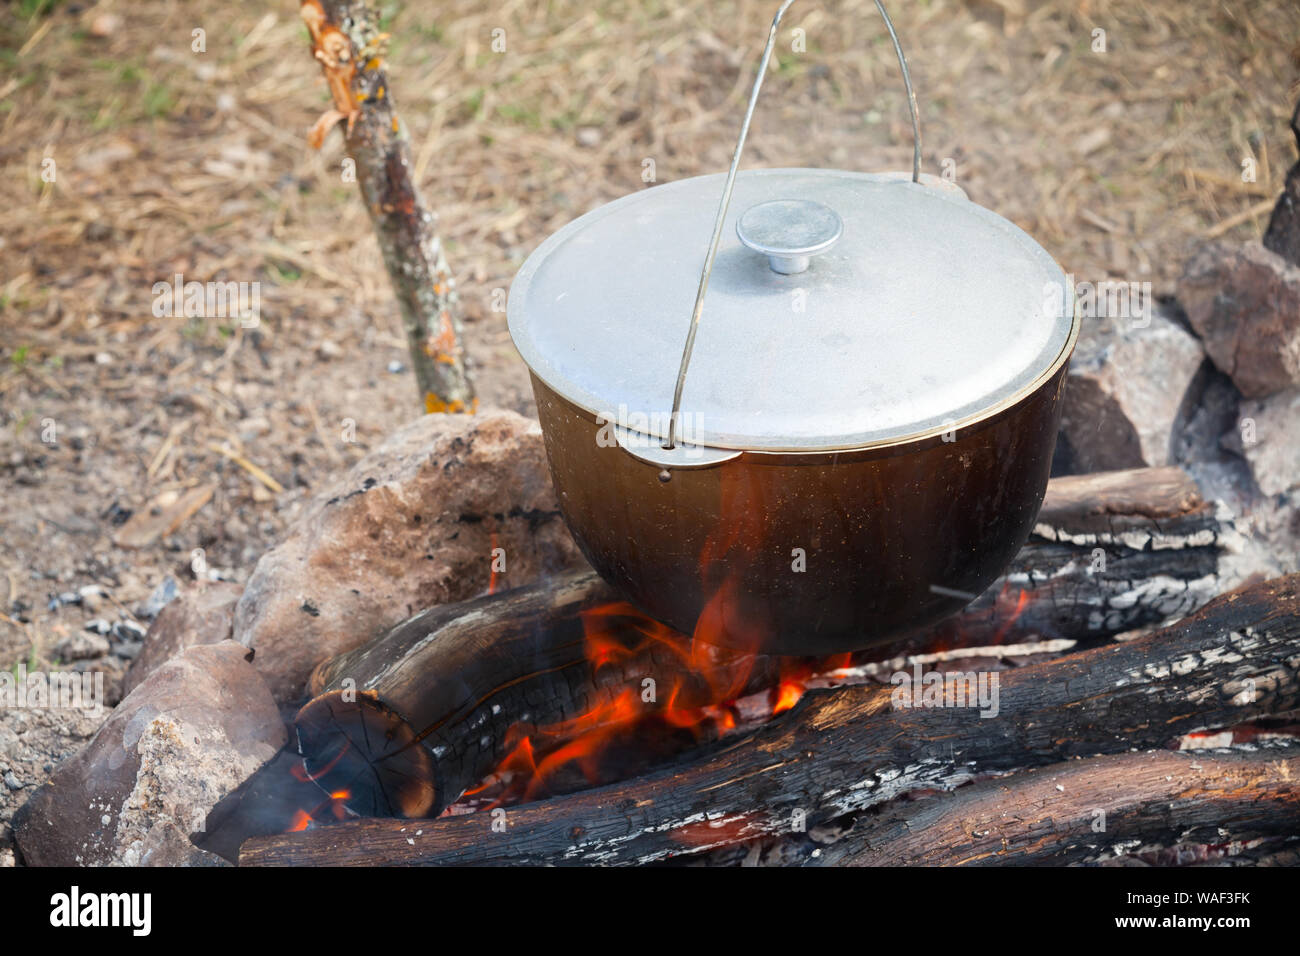 https://c8.alamy.com/comp/WAF3FK/bonfire-and-black-cauldron-preparing-of-a-soup-on-open-fire-camping-meal-WAF3FK.jpg